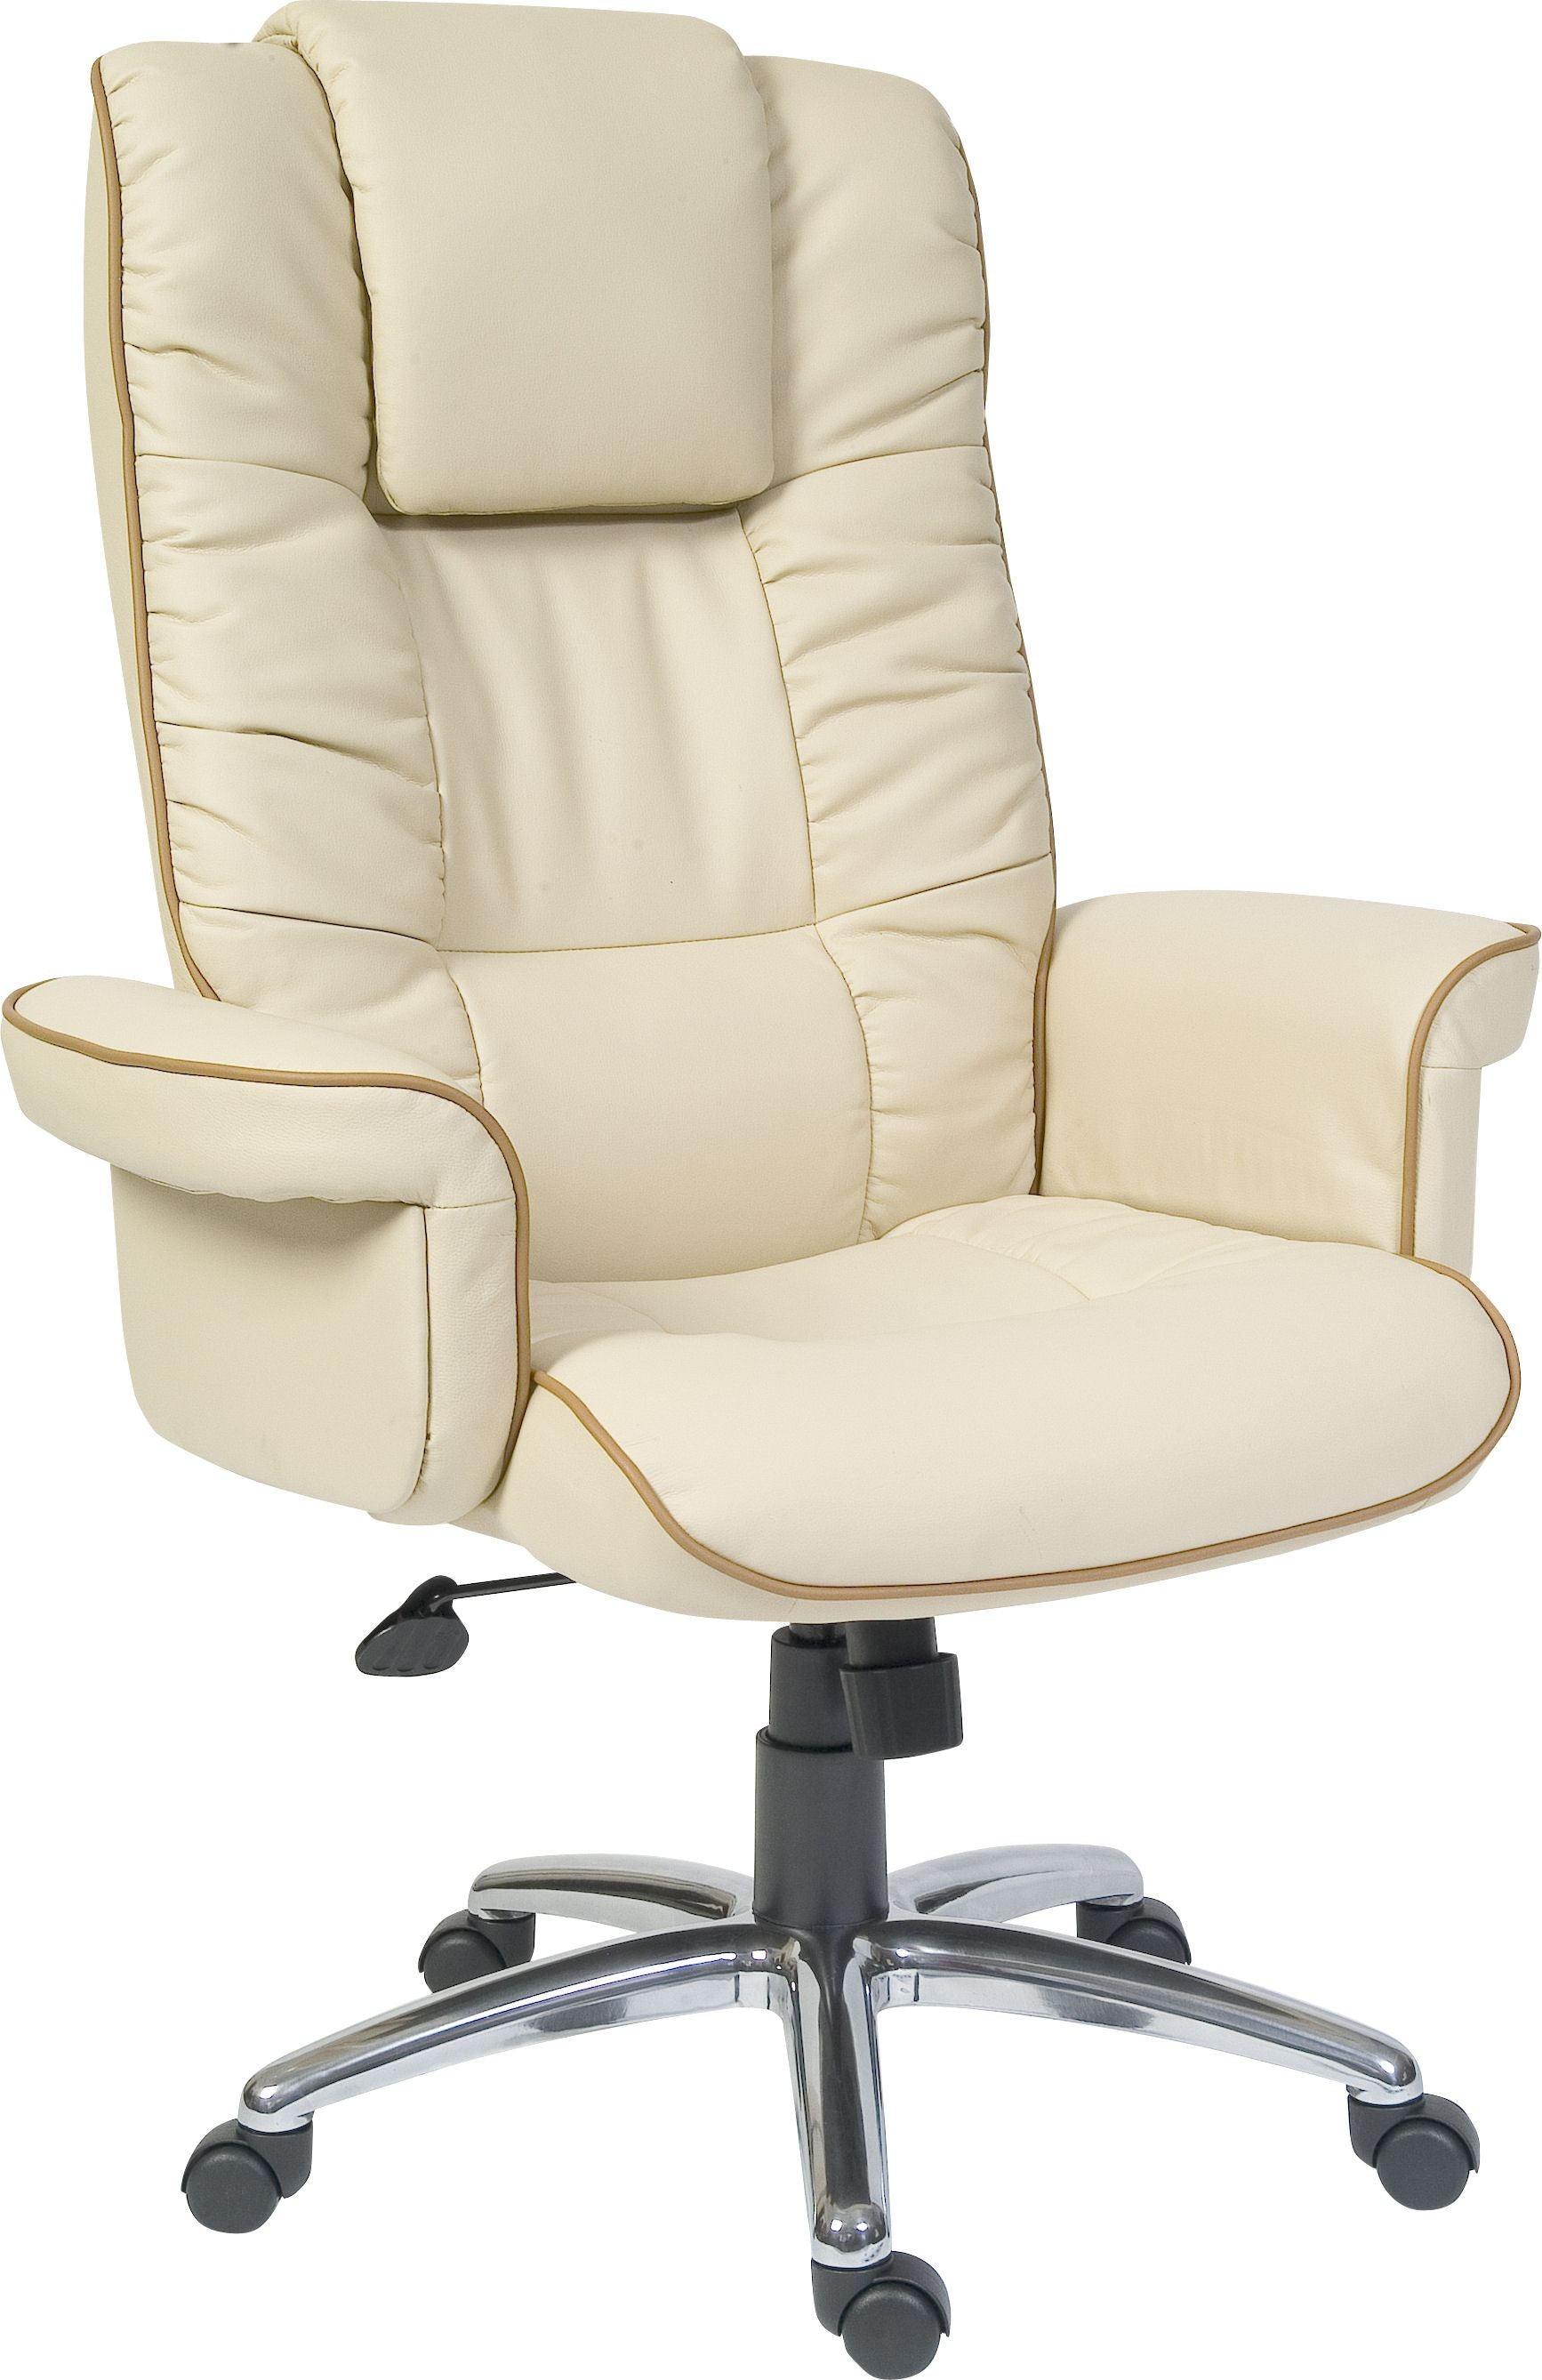 Windsor cream leather office chair - crimblefest furniture - image 1